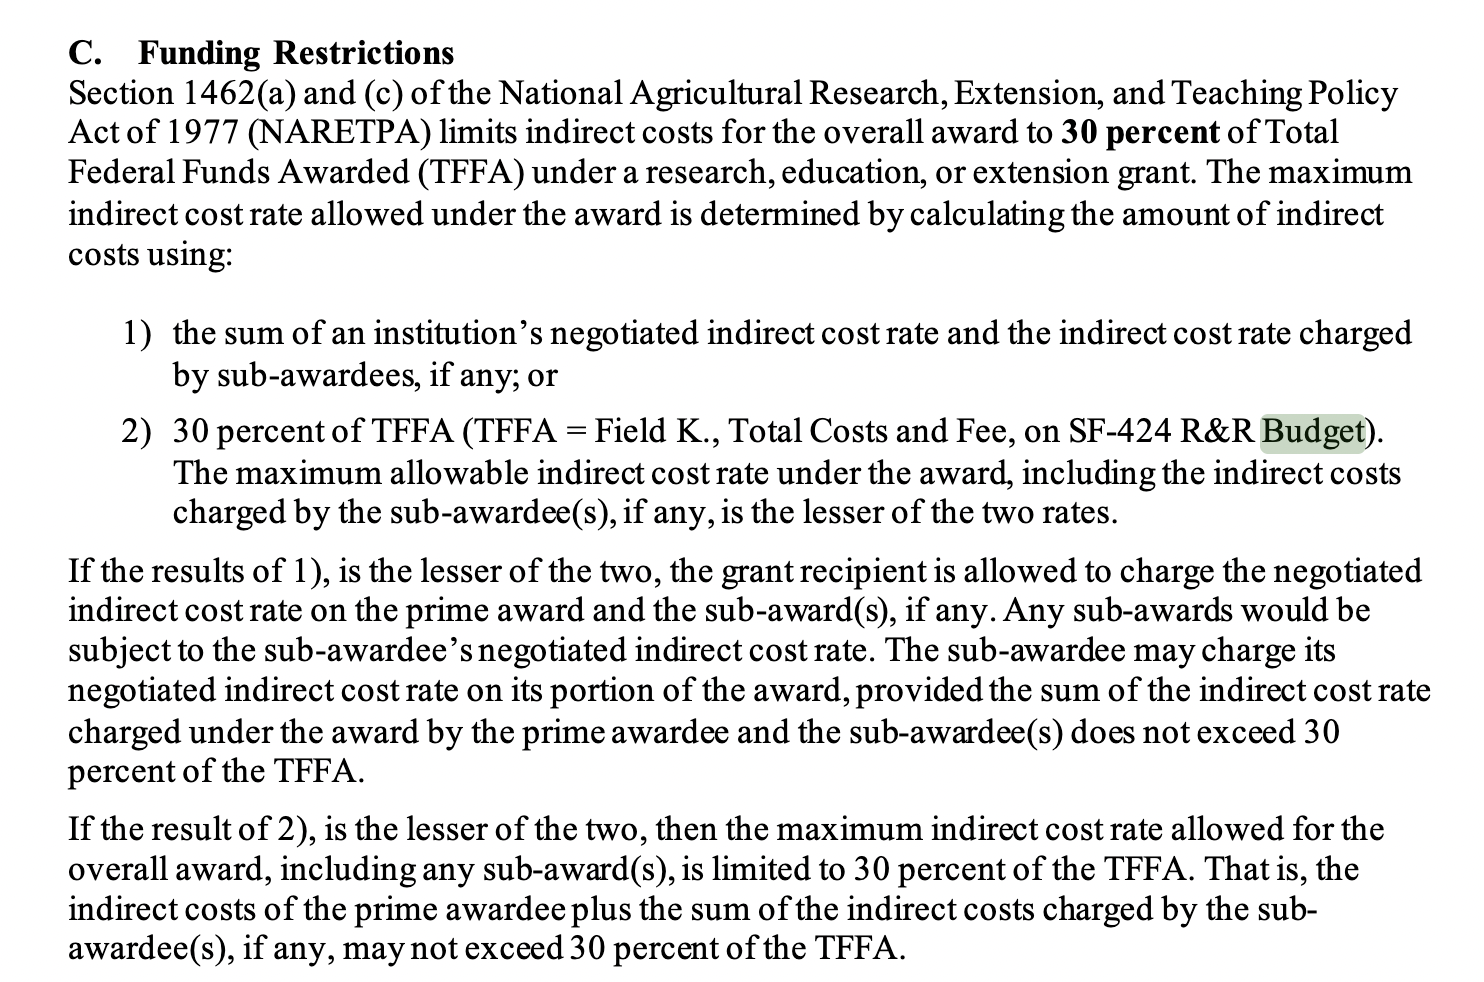 tffa restriction